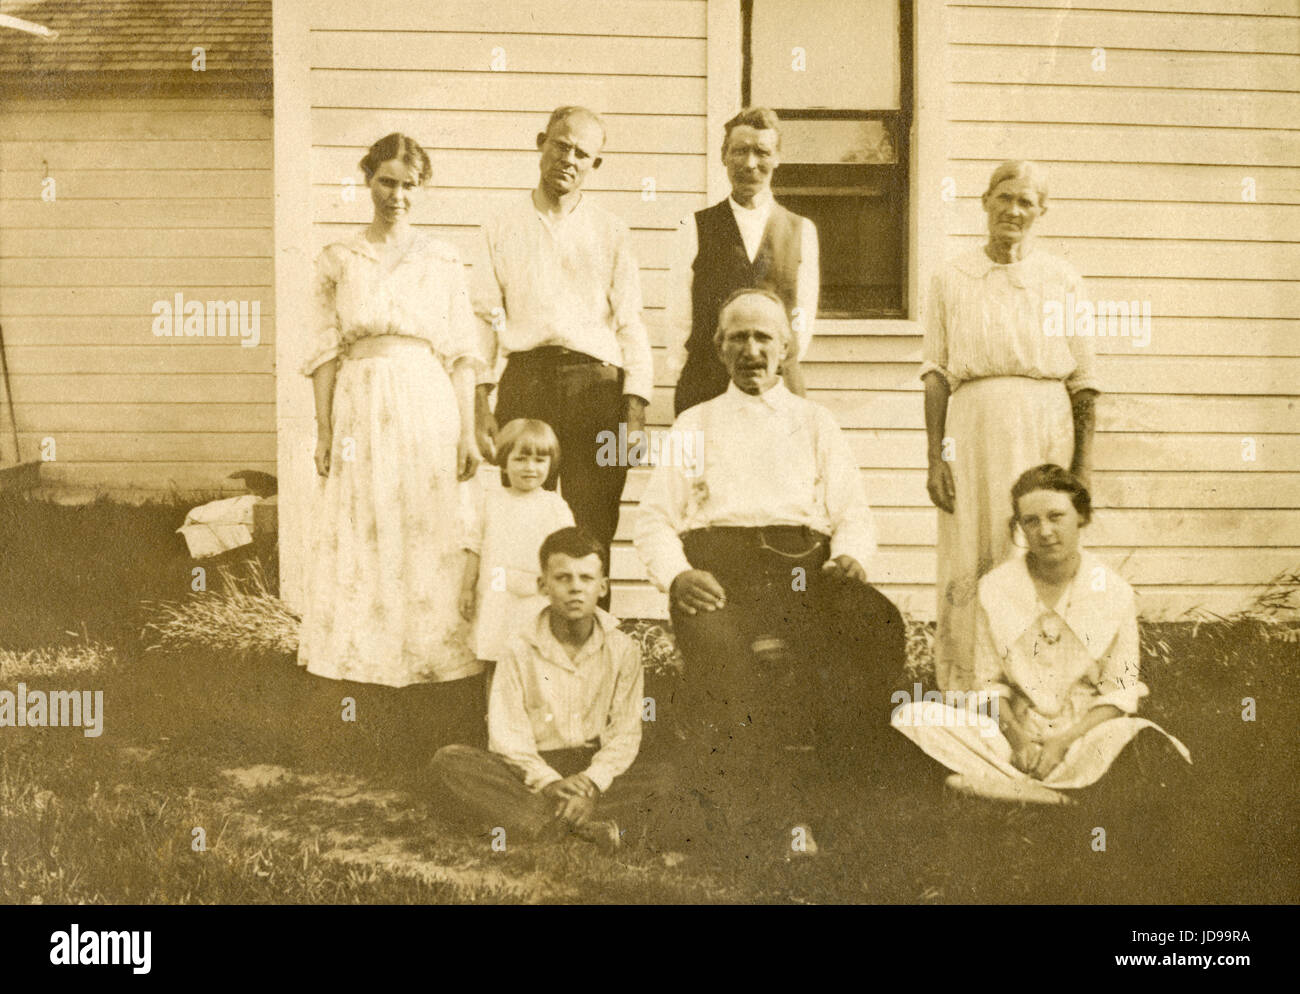 Antique c1922 photograph, farming family portrait. Location is probably Mankato, Minnesota. SOURCE: ORIGINAL PHOTOGRAPH. Stock Photo